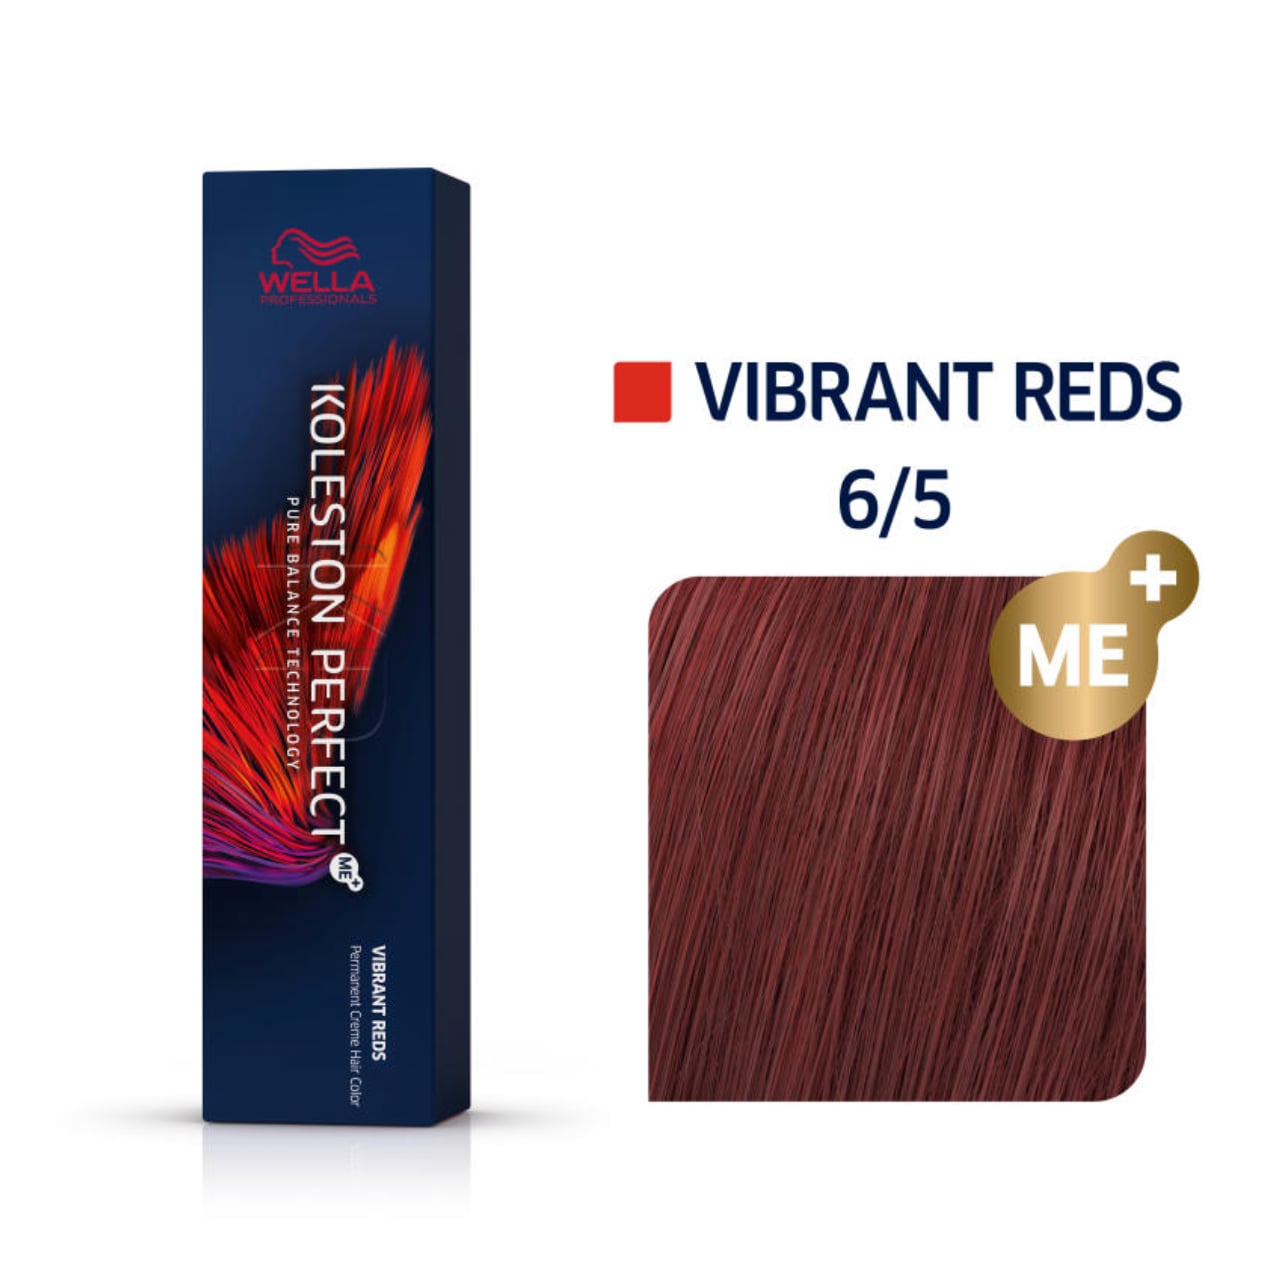 a box of wella vibrant red hair dye